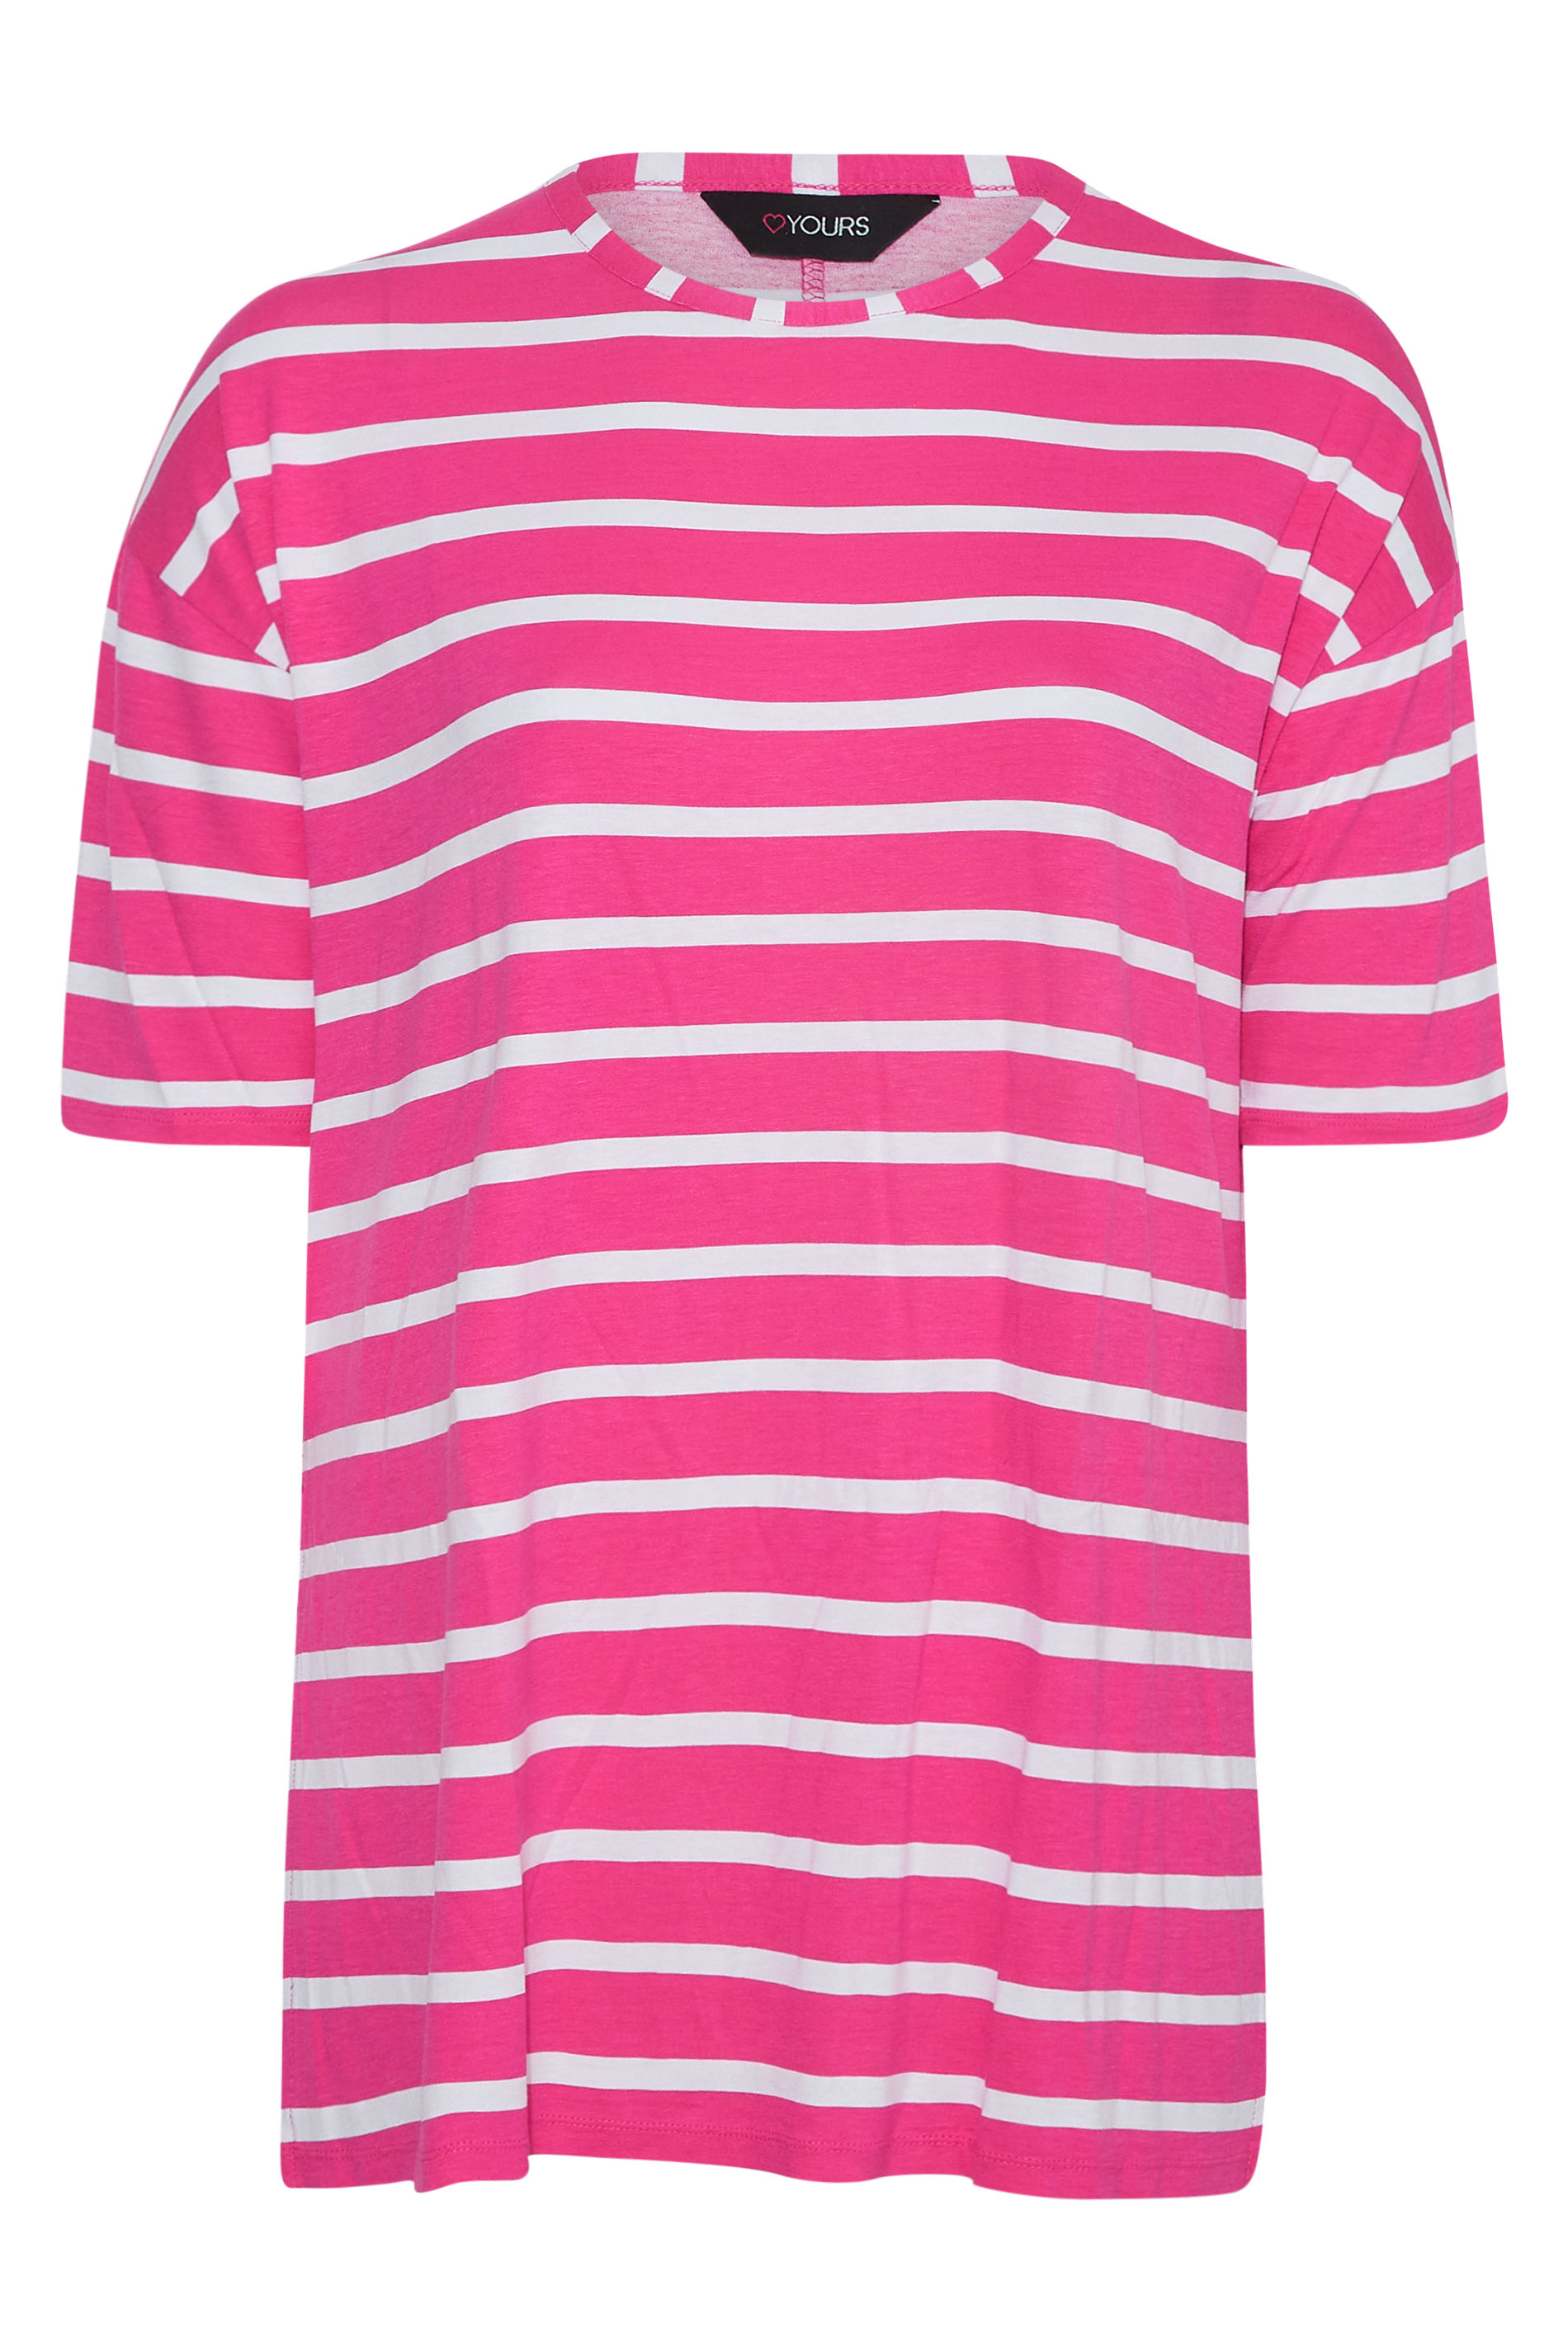 Grande taille  Tops Grande taille  T-Shirts Basiques & Débardeurs | T-Shirt Oversize Rose & Blanc à Rayures - FH77847